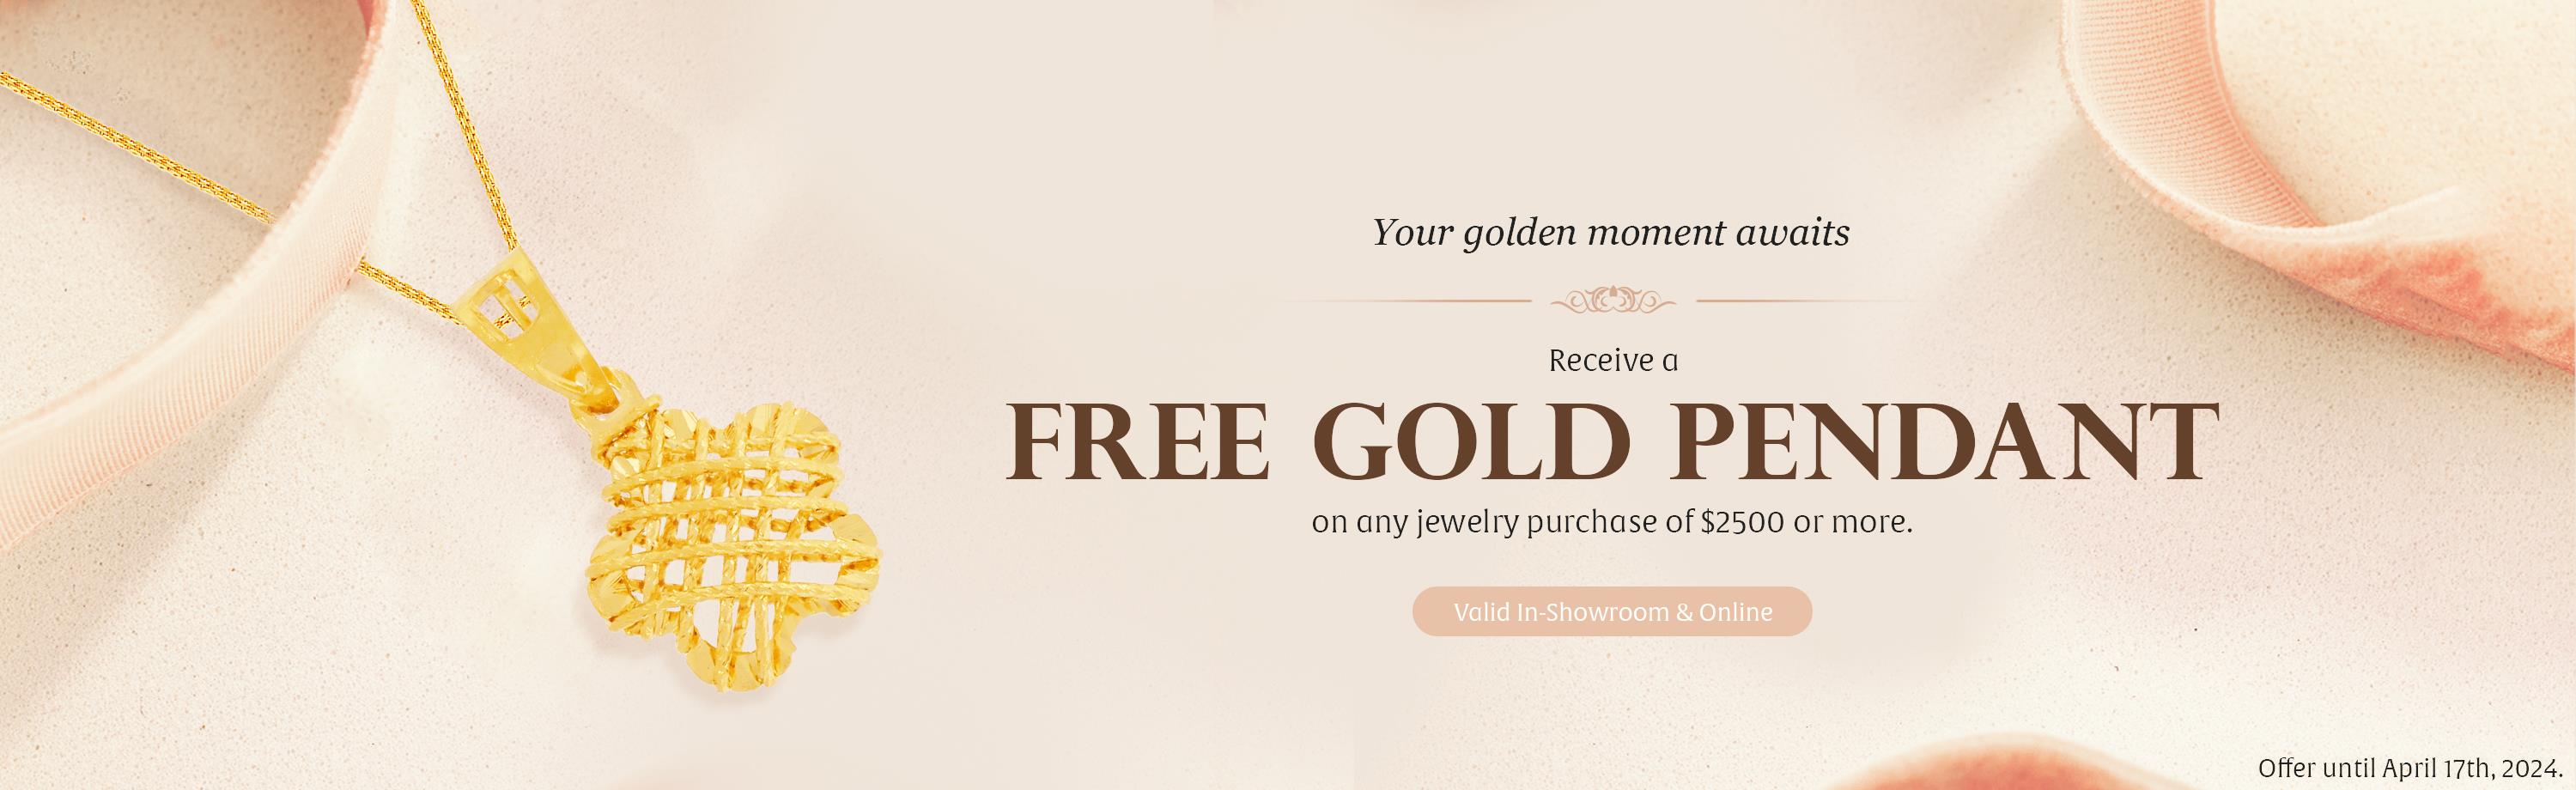 Free_Gold_Pendant_Desktop